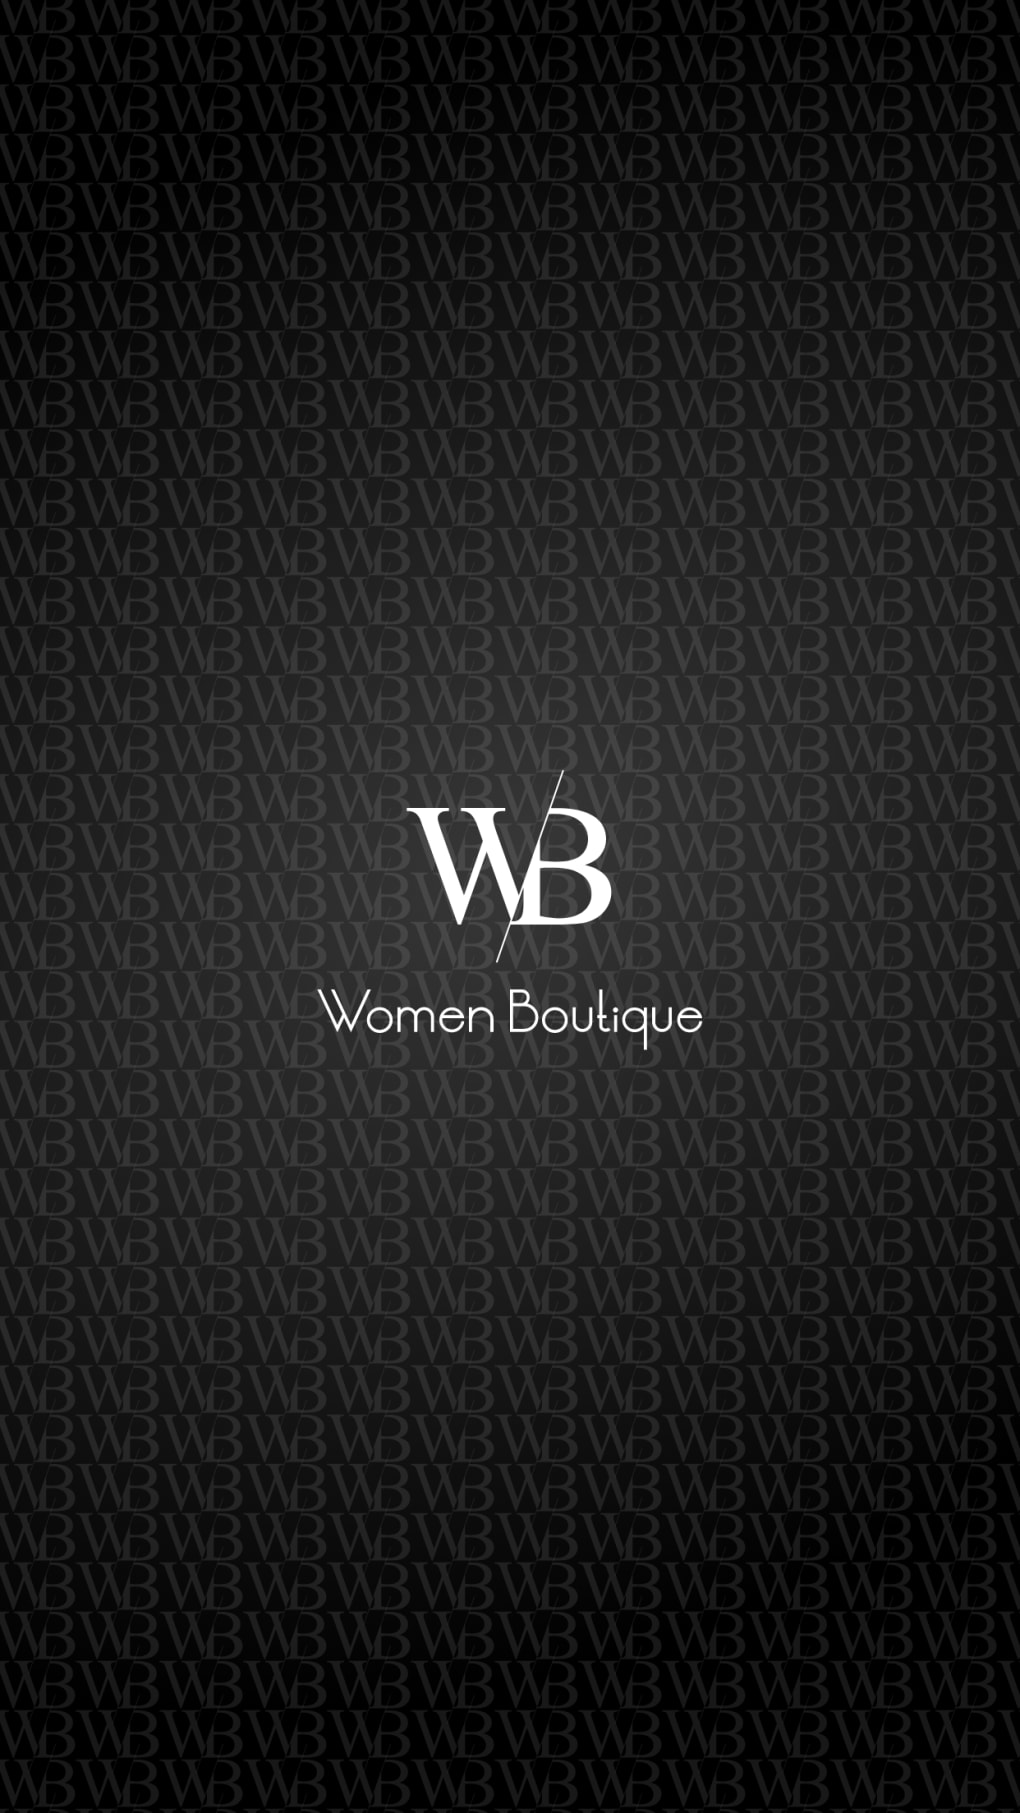 Women Boutique para iPhone - Download